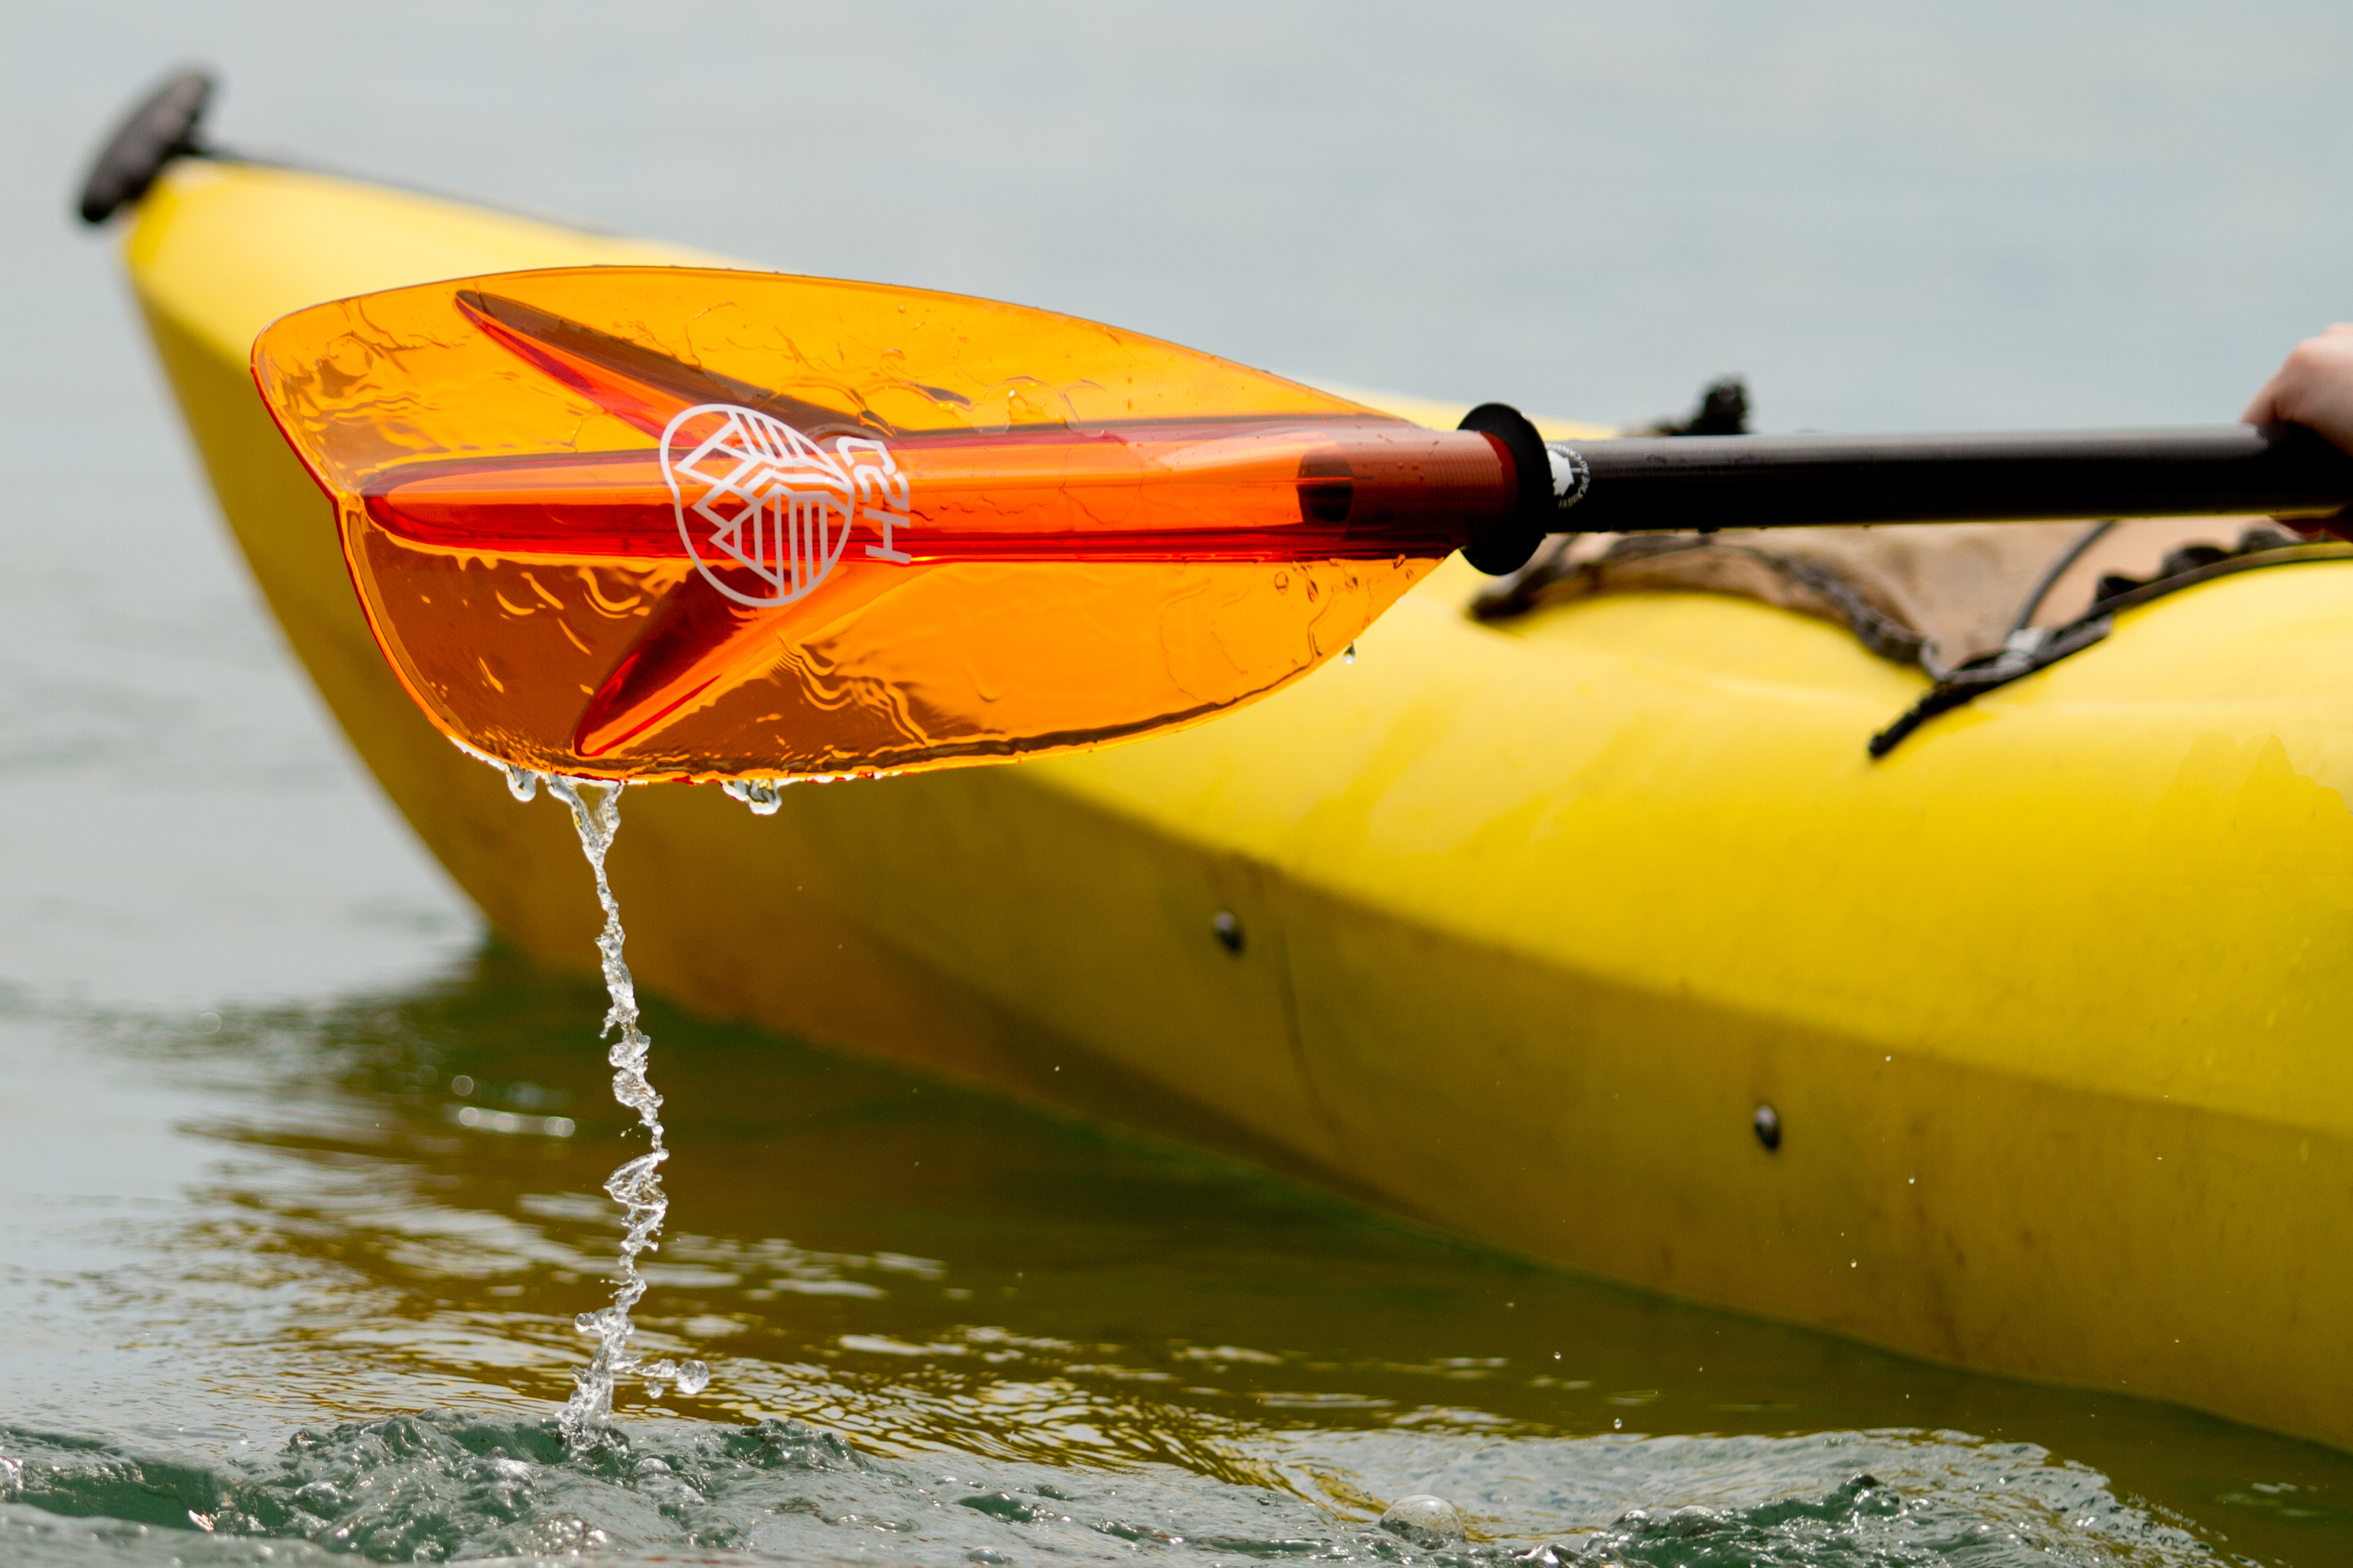 Kayak Paddles: Crystal X 2.0 Fast Ferrule by H2O Performance Paddles - Image 3667